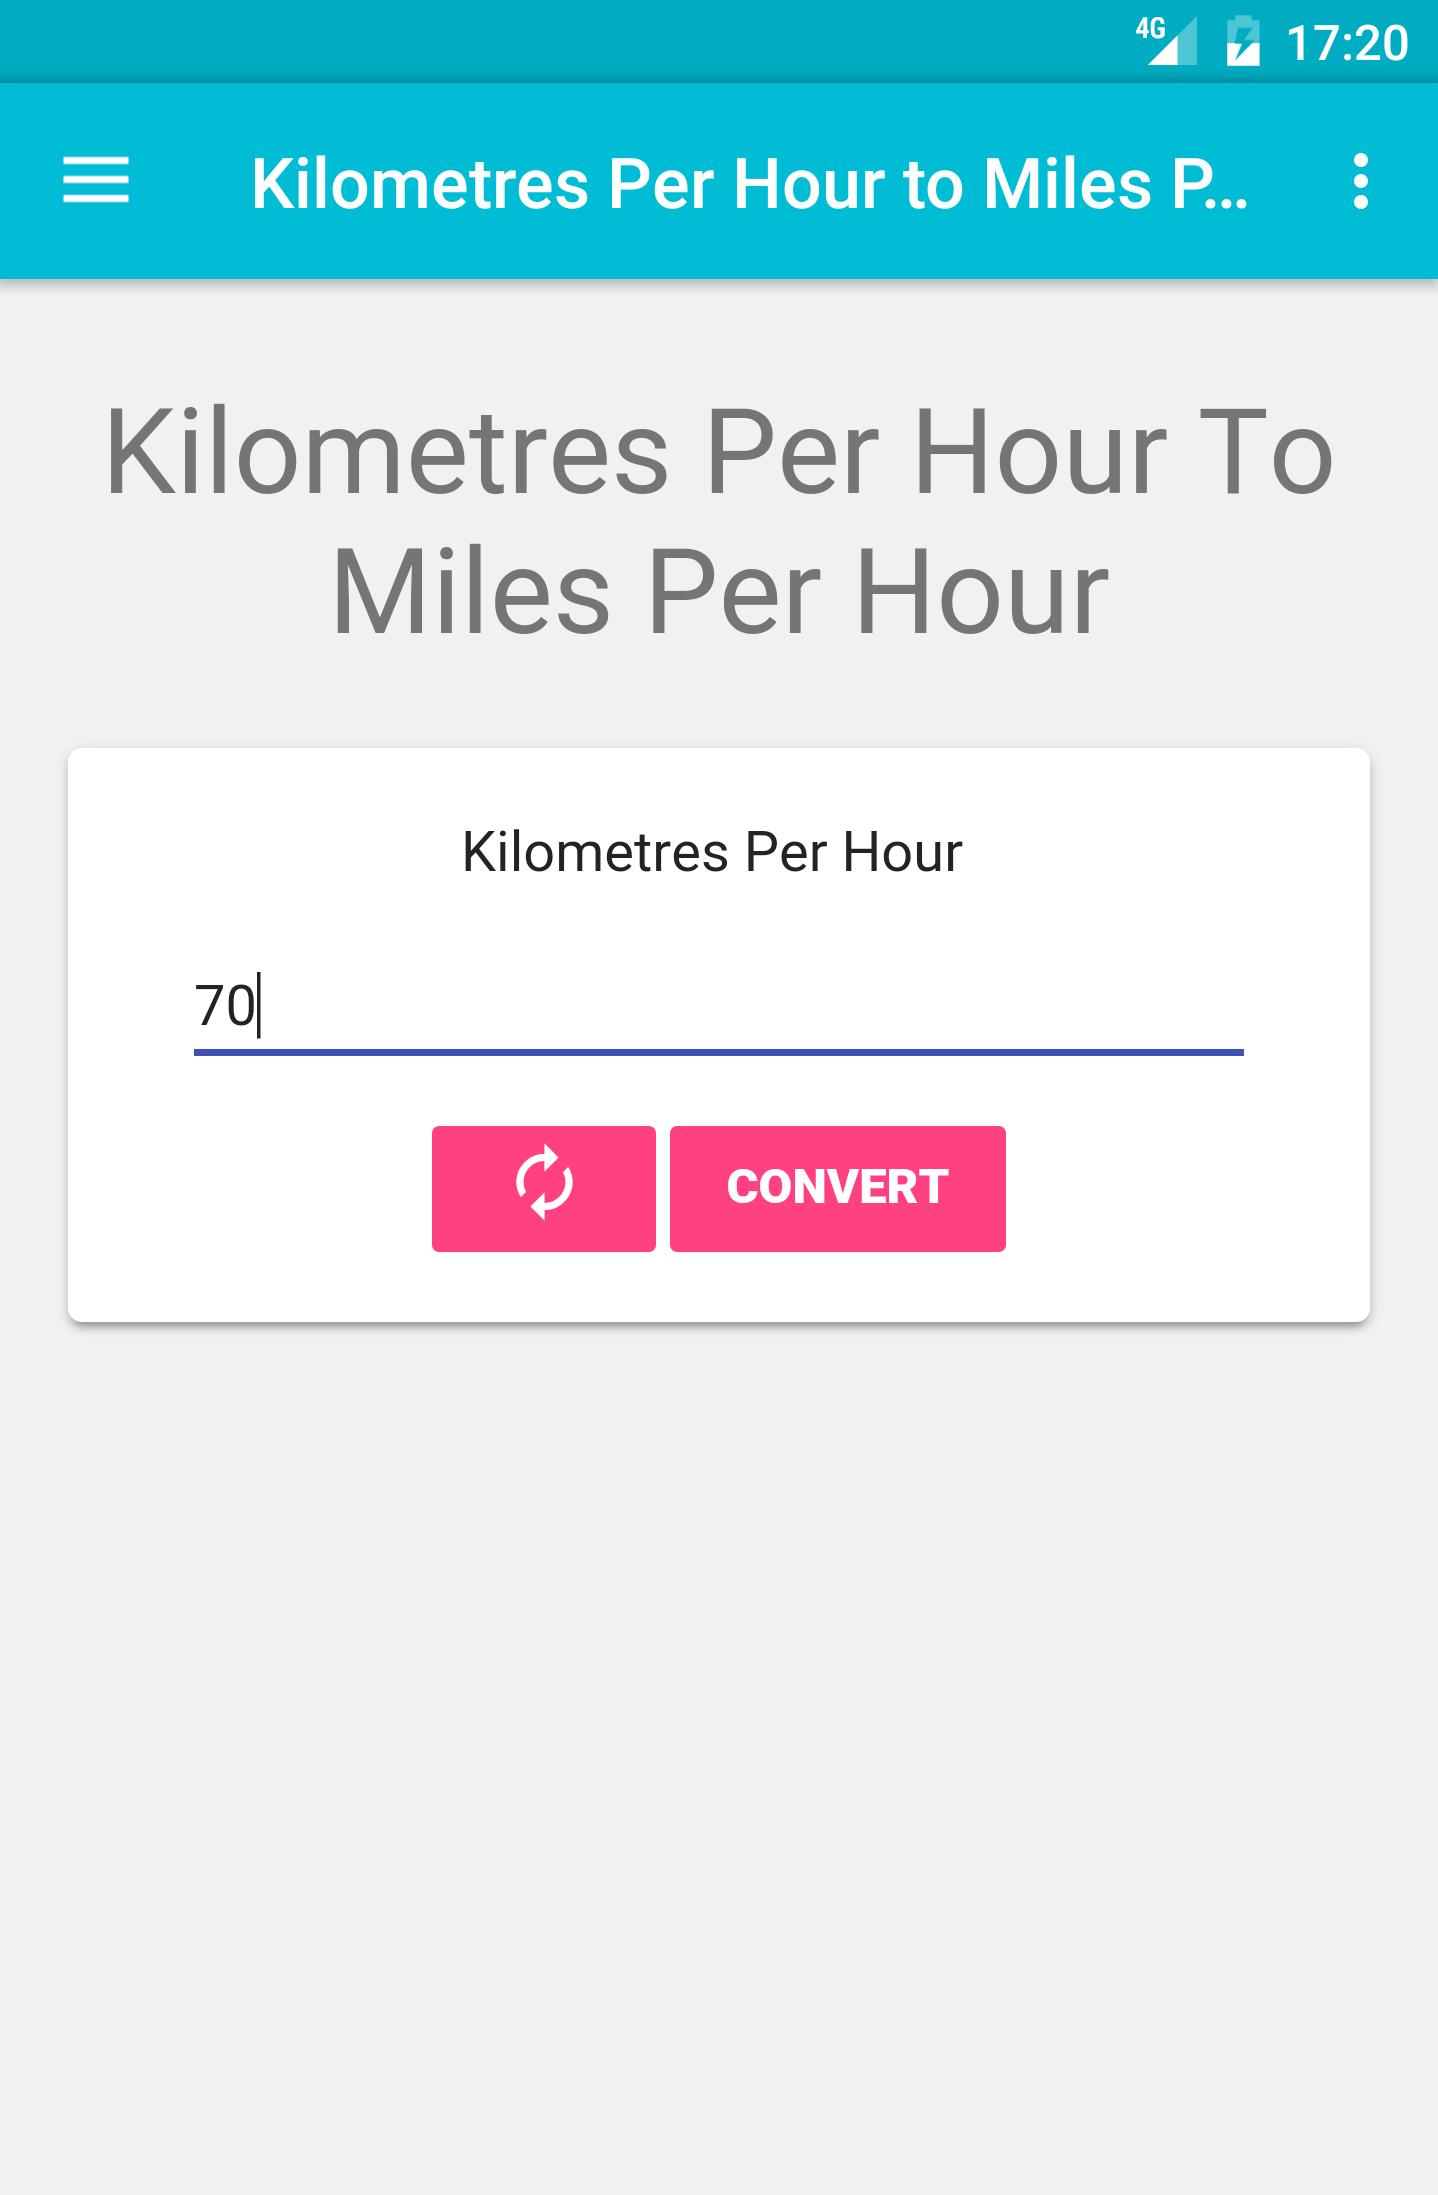 Square Meters to Square feet. Sq feet to sq Meters. Kilometers per hour. Per hour перевод. Miles per hour